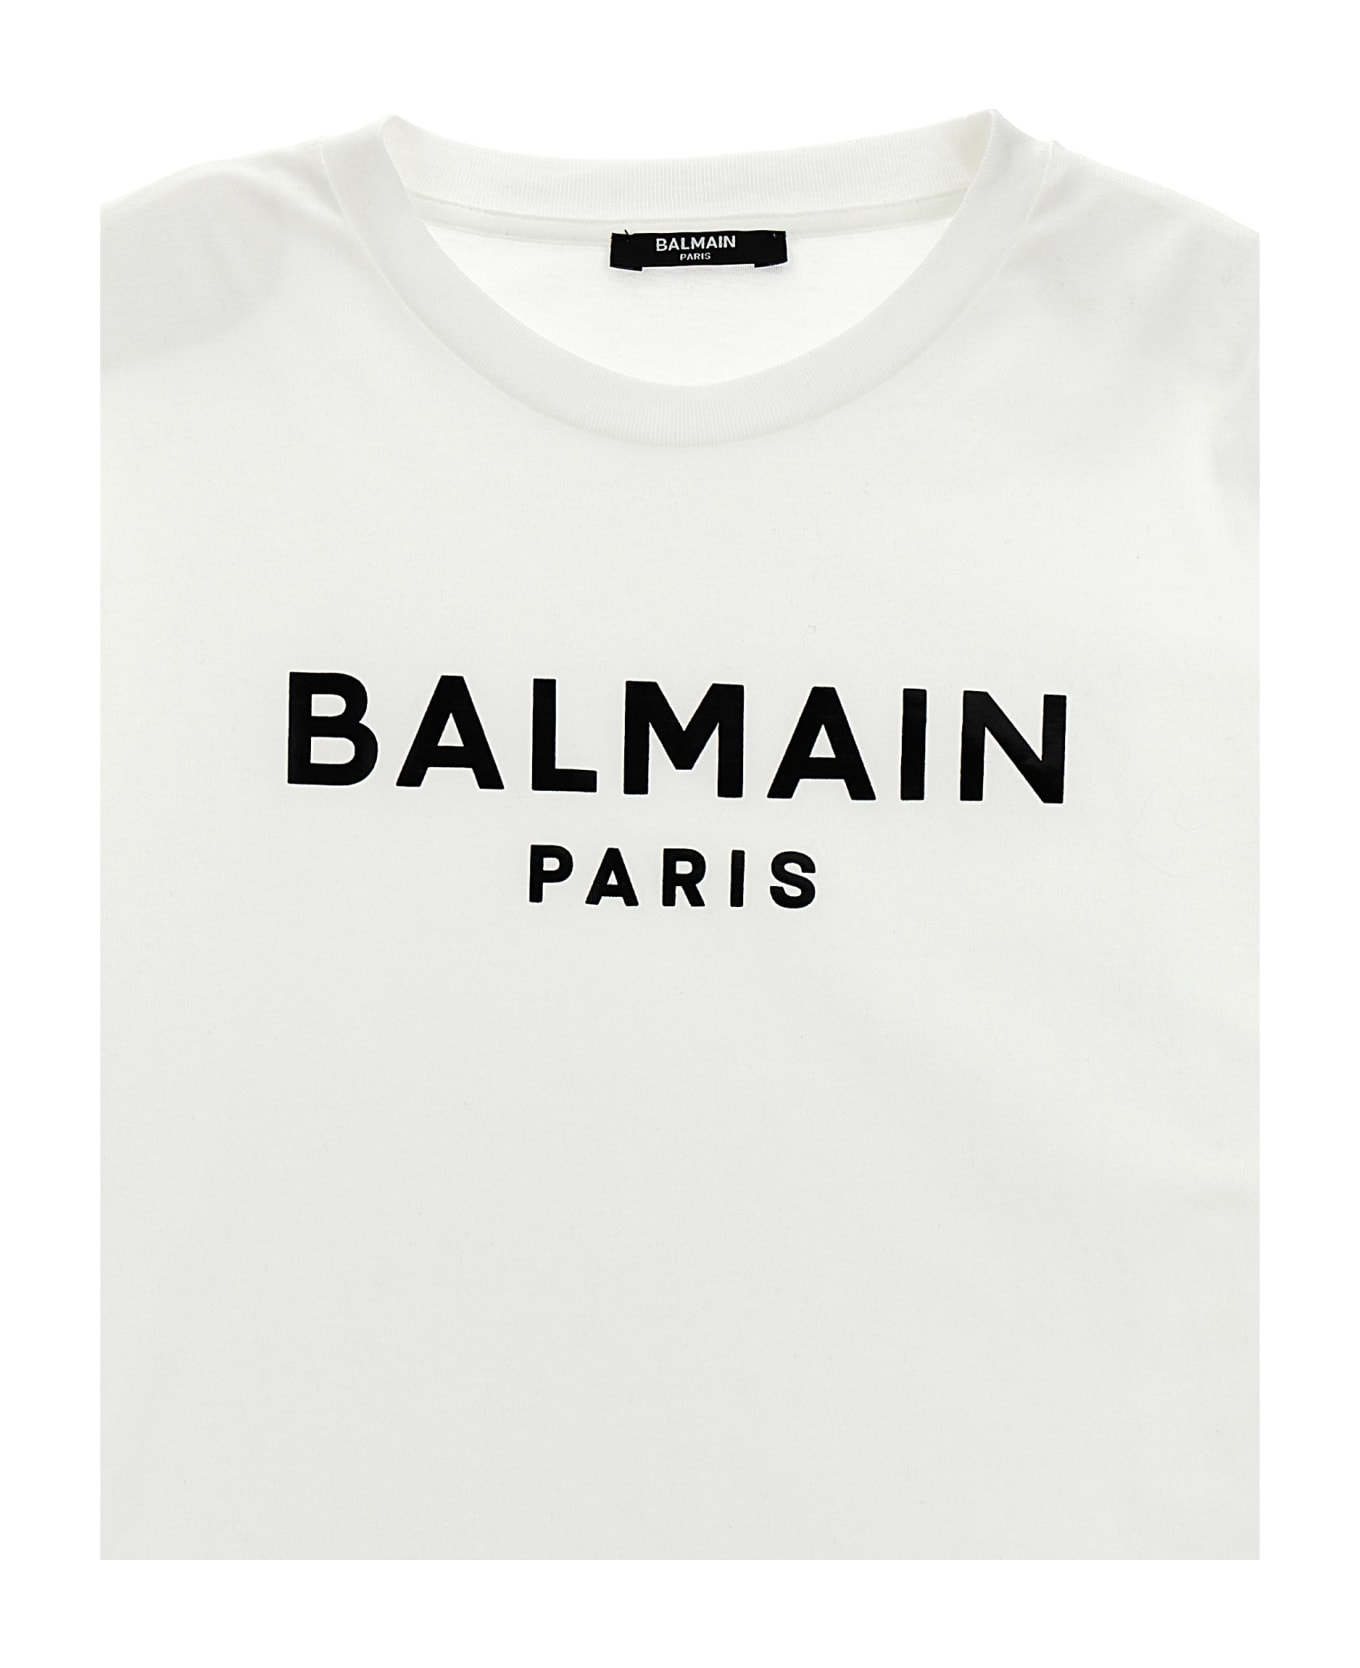 Balmain Logo T-shirt - Bianco